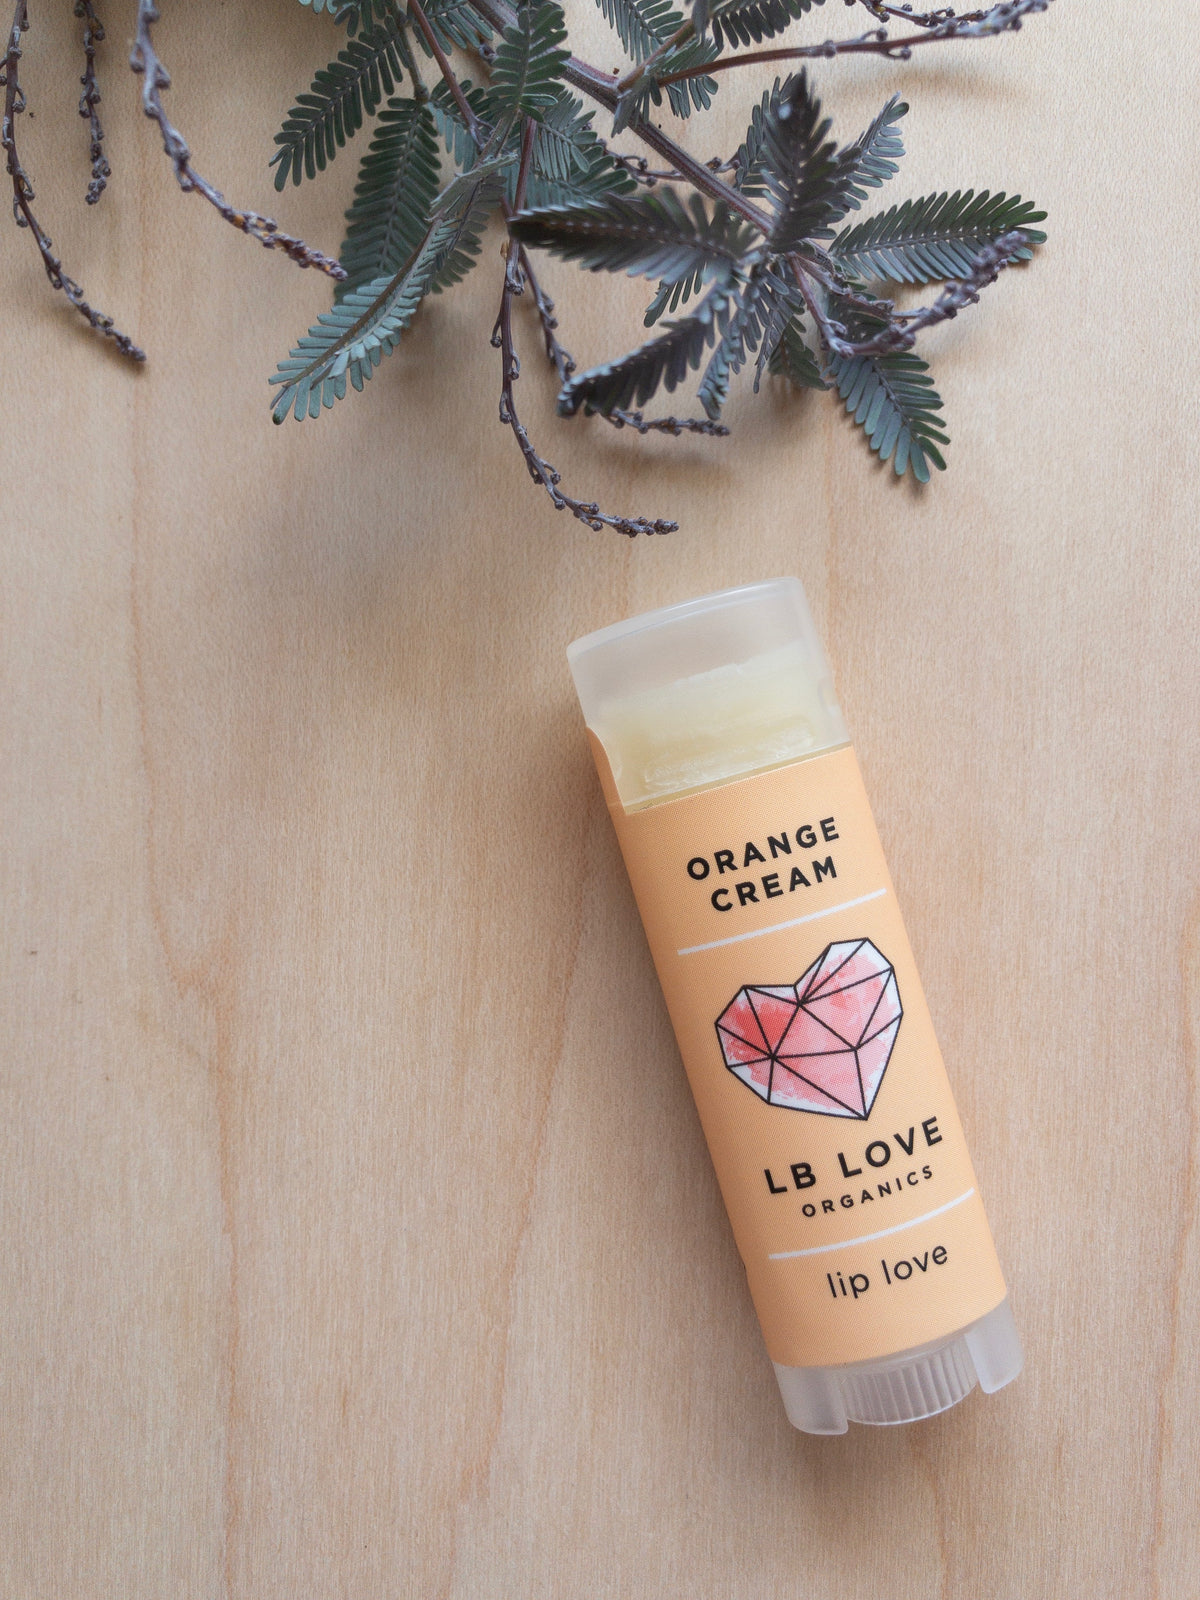 LB Love Organics lip balm orange cream dry and sensitive lips